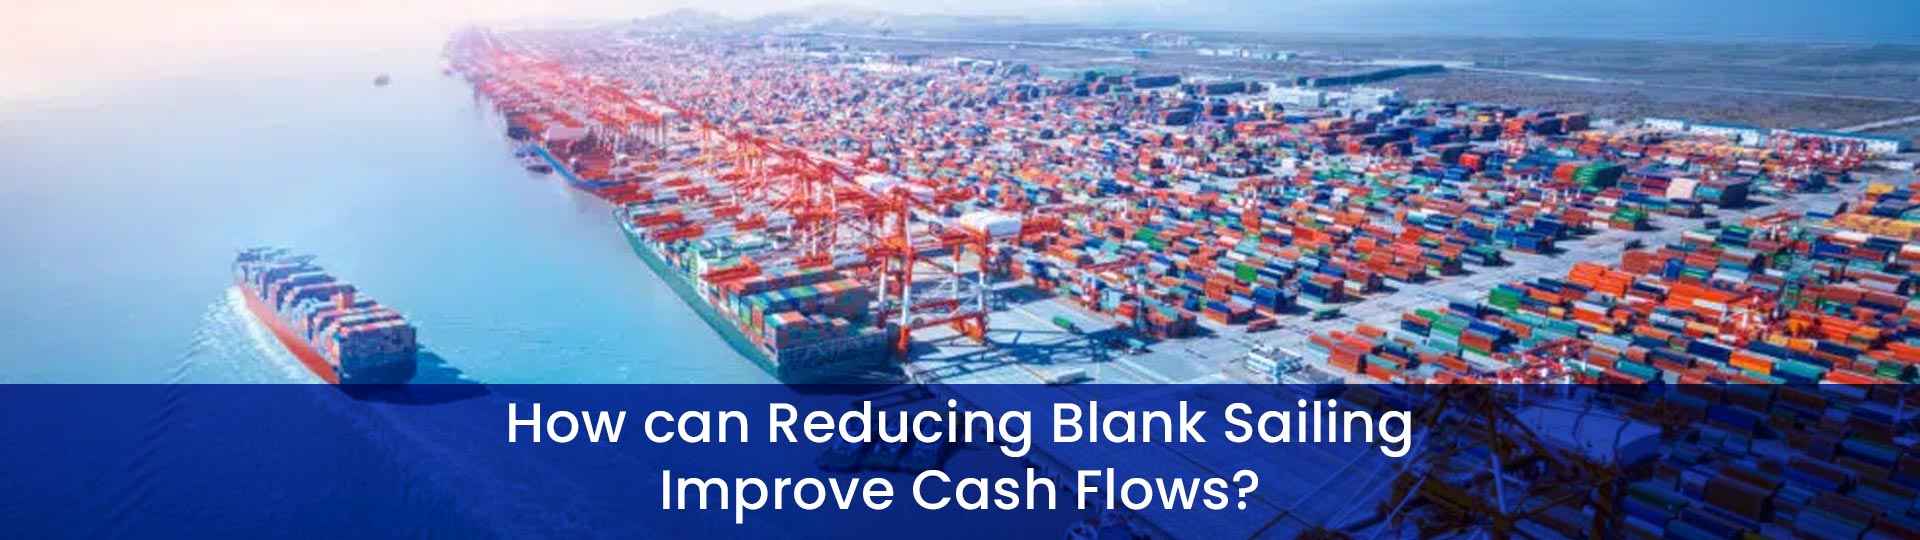 Blank Sailing Improve Cash Flows